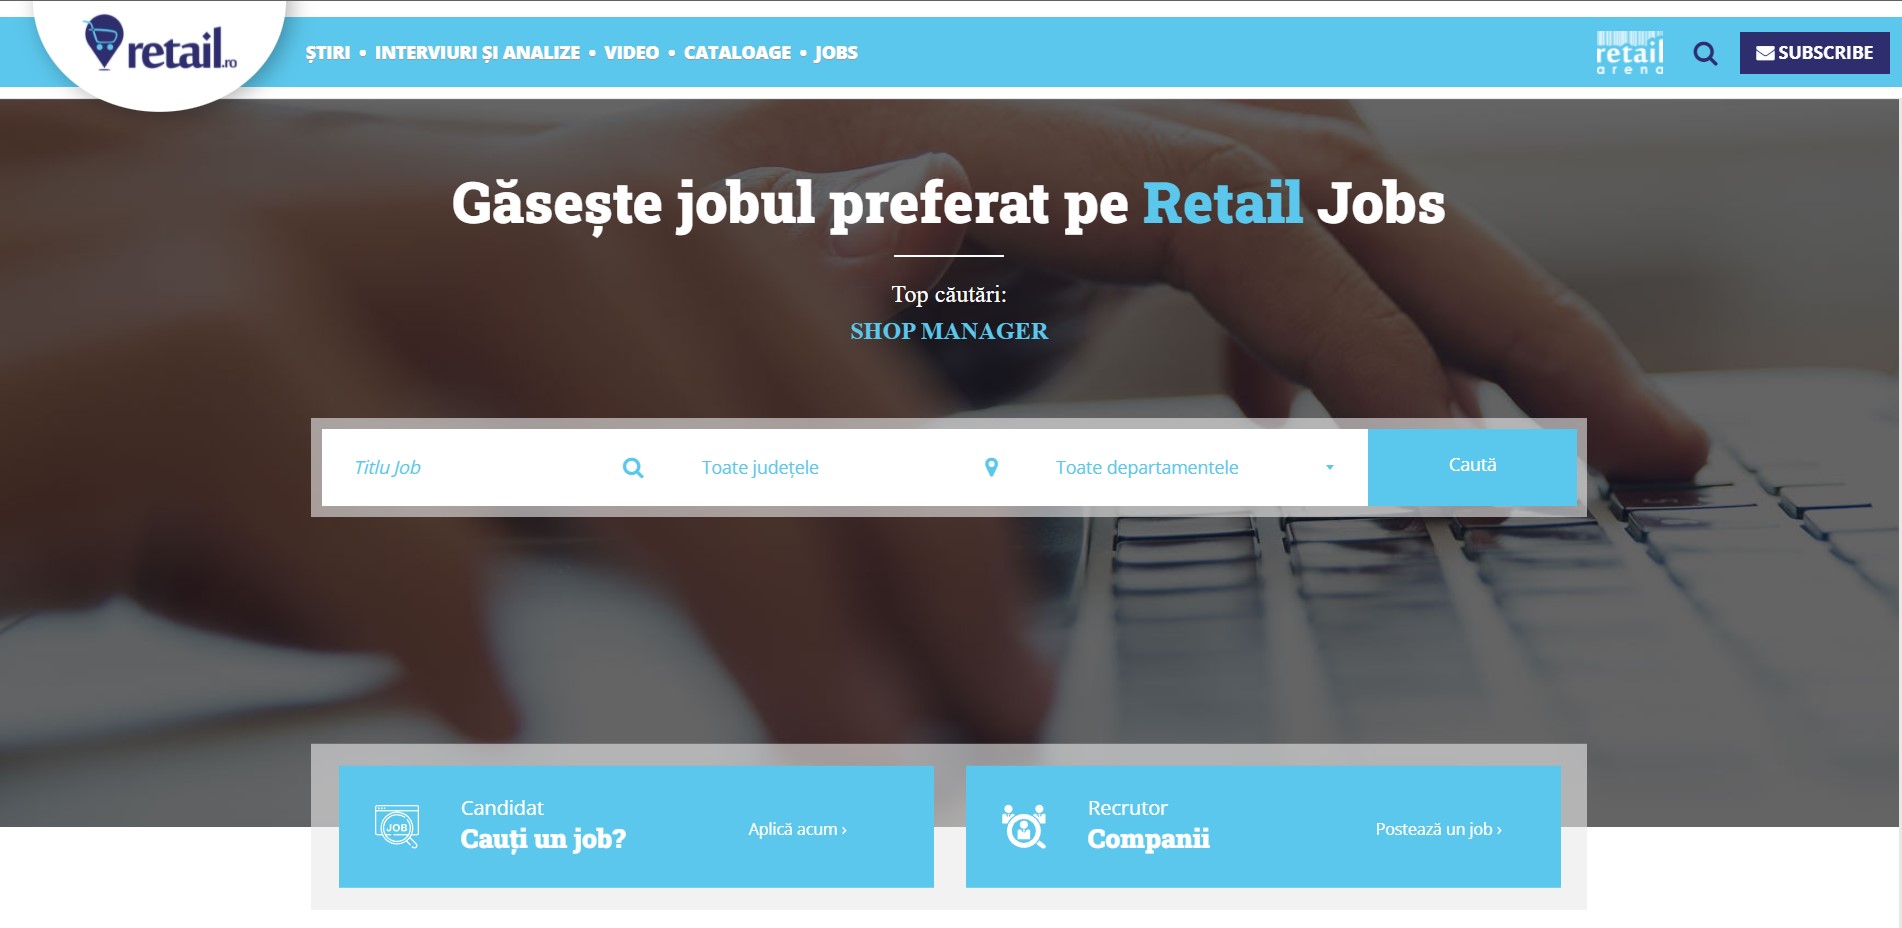 Retail.ro lansează serviciul de recrutare a angajaților Retail Jobs